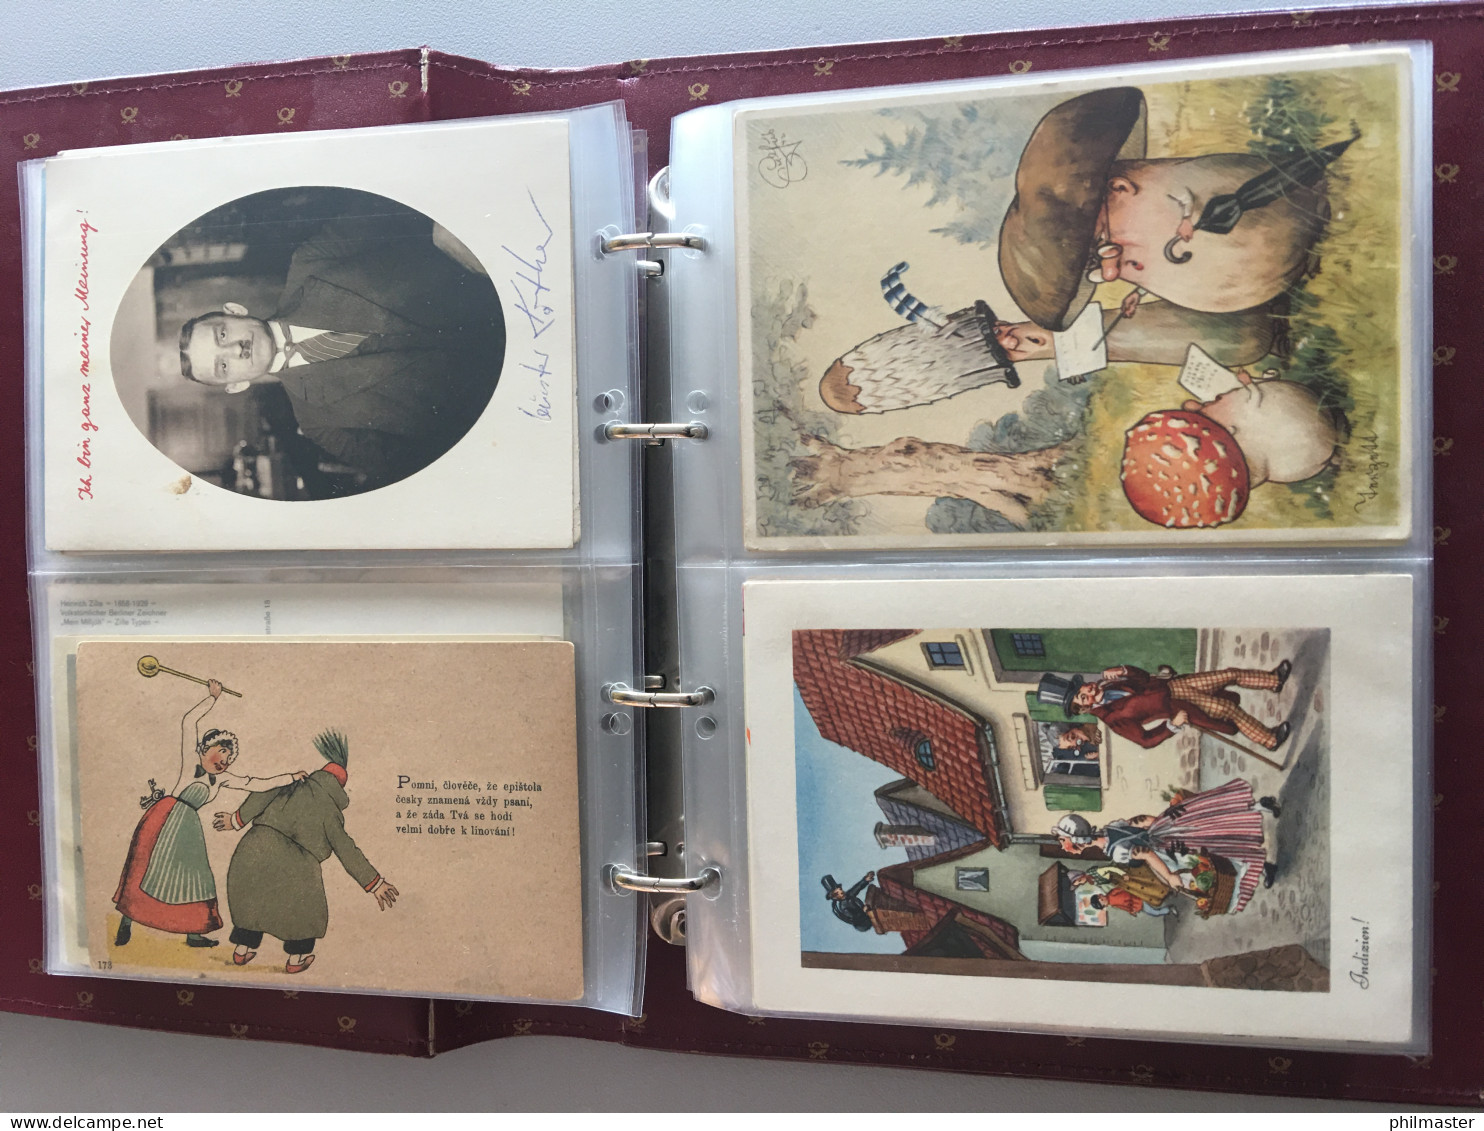 Sammlung Ansichtskarten, ca. 180 Karten Motiv Karikaturen im Album laut Abb.